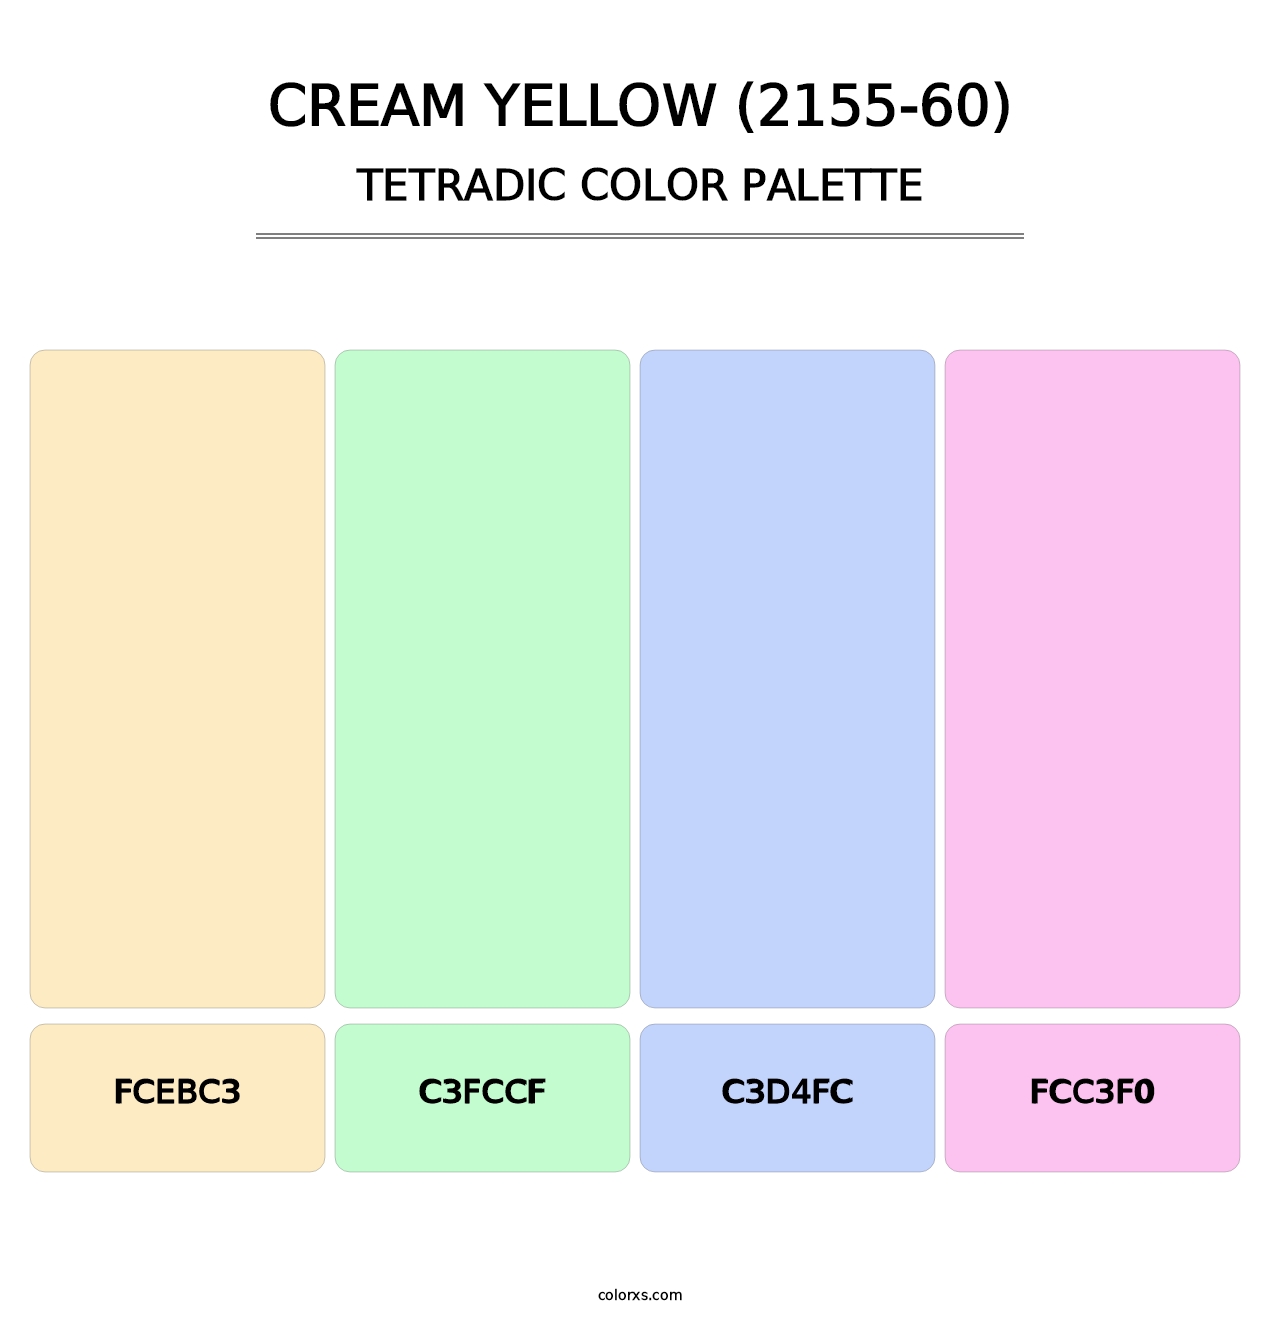 Cream Yellow (2155-60) - Tetradic Color Palette